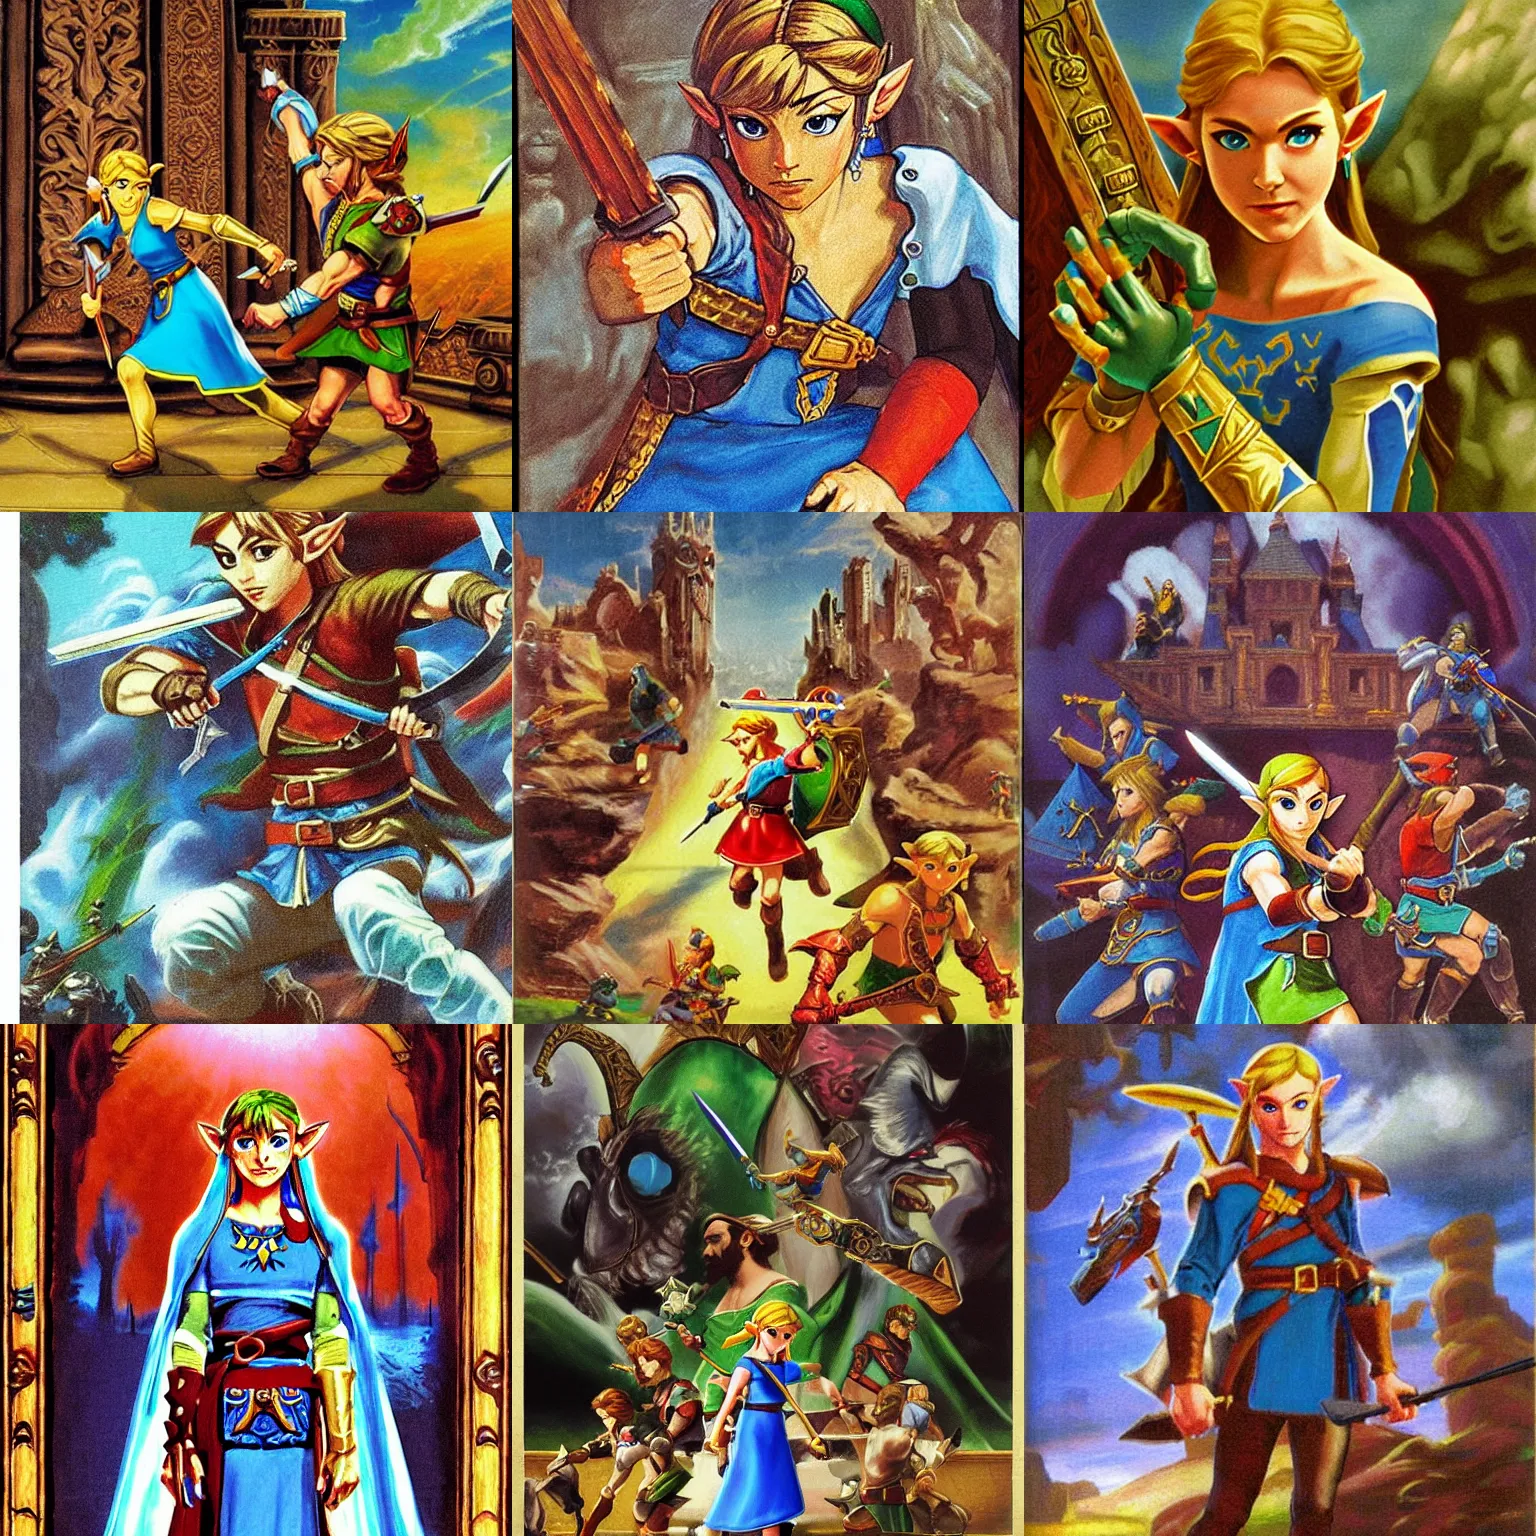 Prompt: Zelda classic for NES concept art, baroque painting